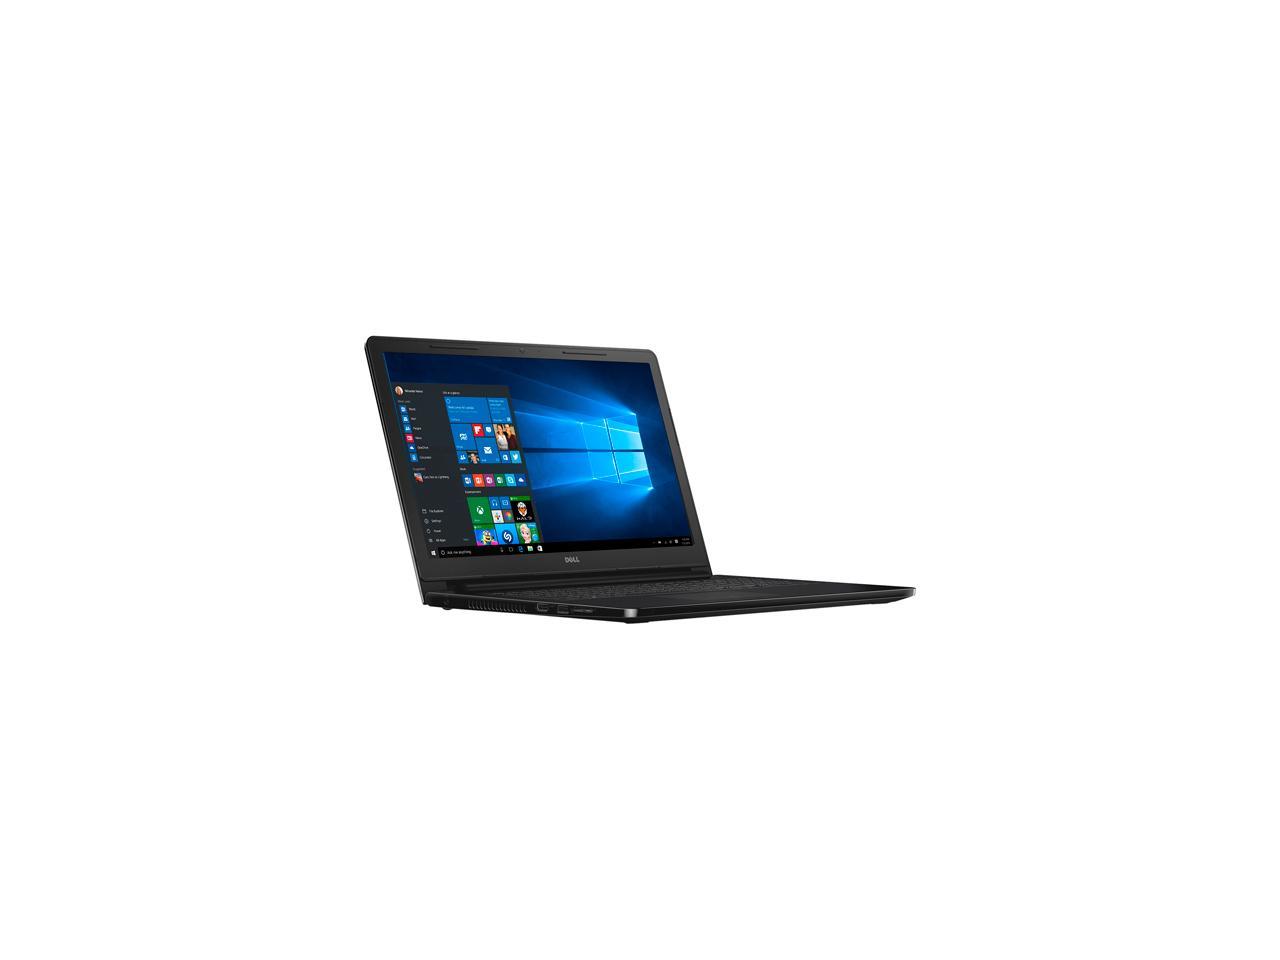 DELL Laptop Inspiron i3552-4042BLK Intel Celeron N3050 (1.60 GHz) 4 GB Memory 500 GB HDD Intel HD Graphics 15.6" Windows 10 Home 64-Bit